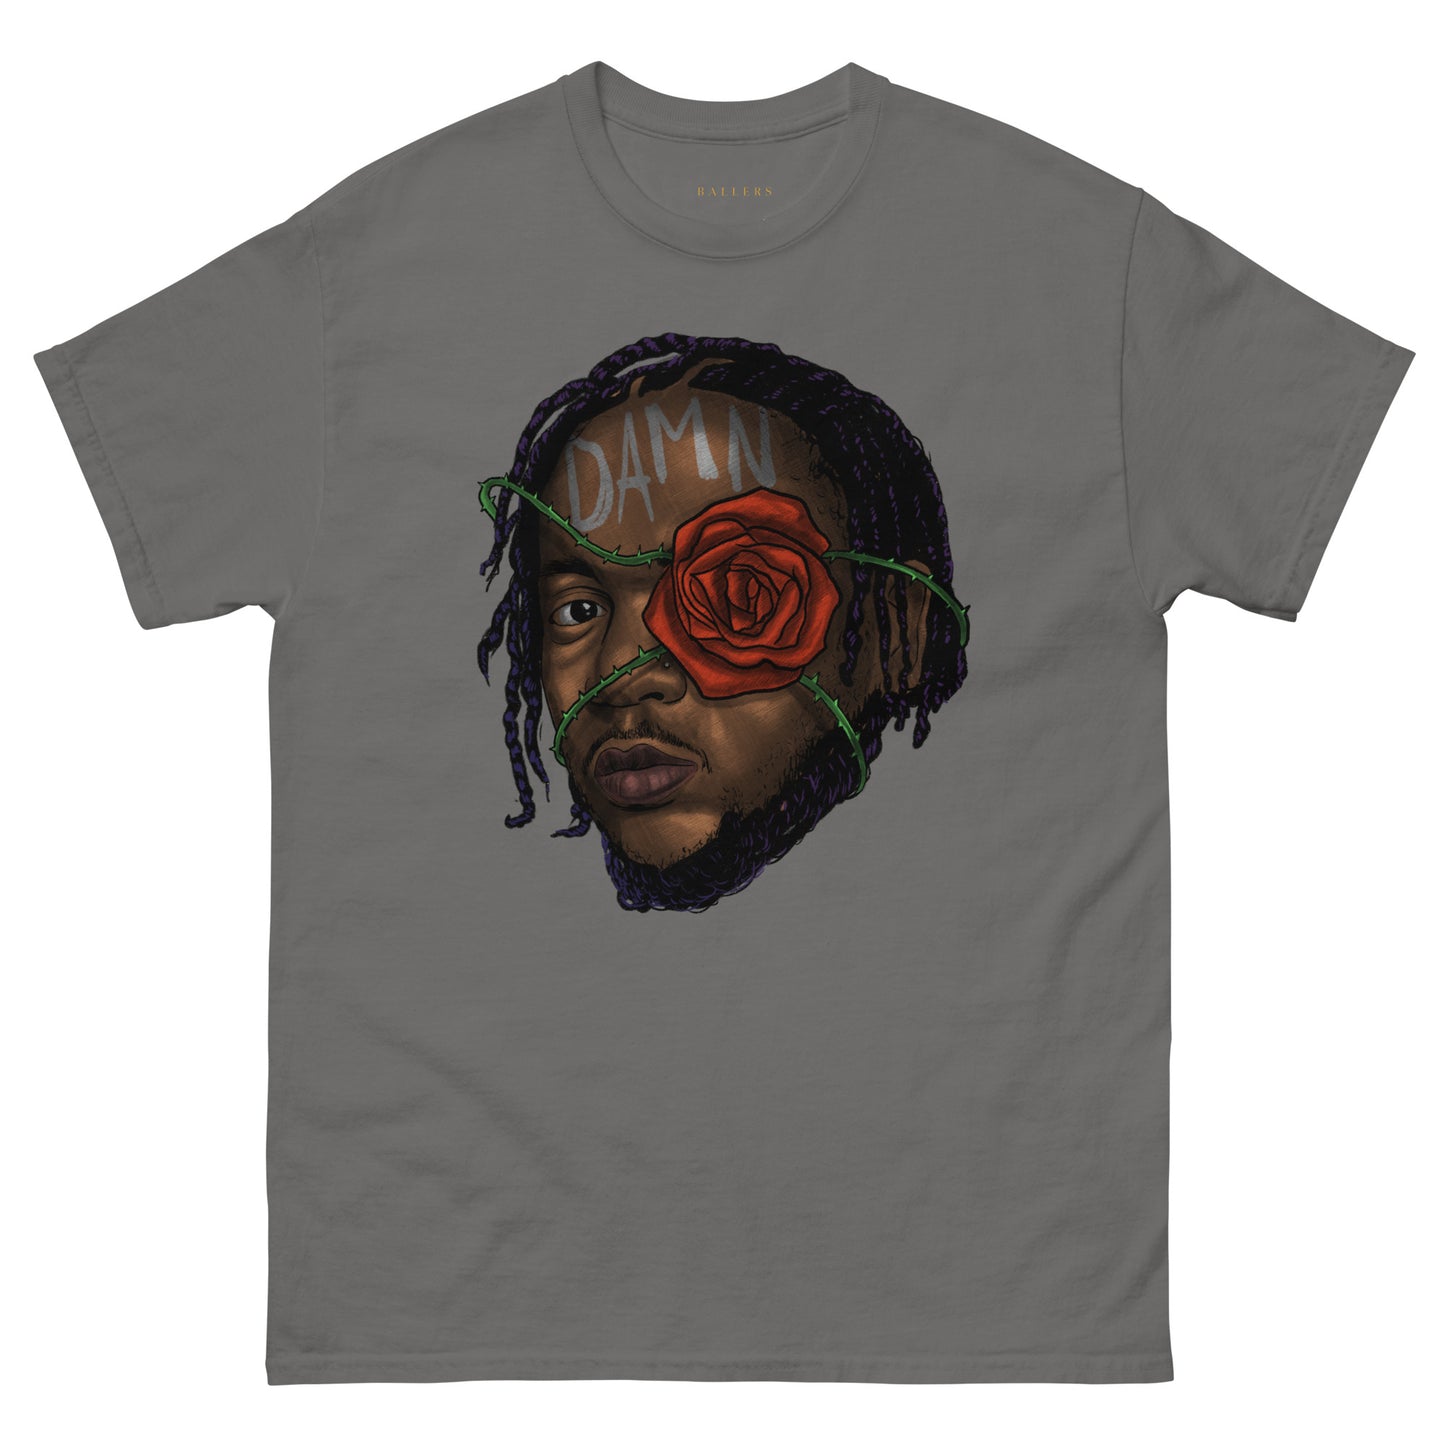 Kendrick Lamar "DAMN" T-Shirt